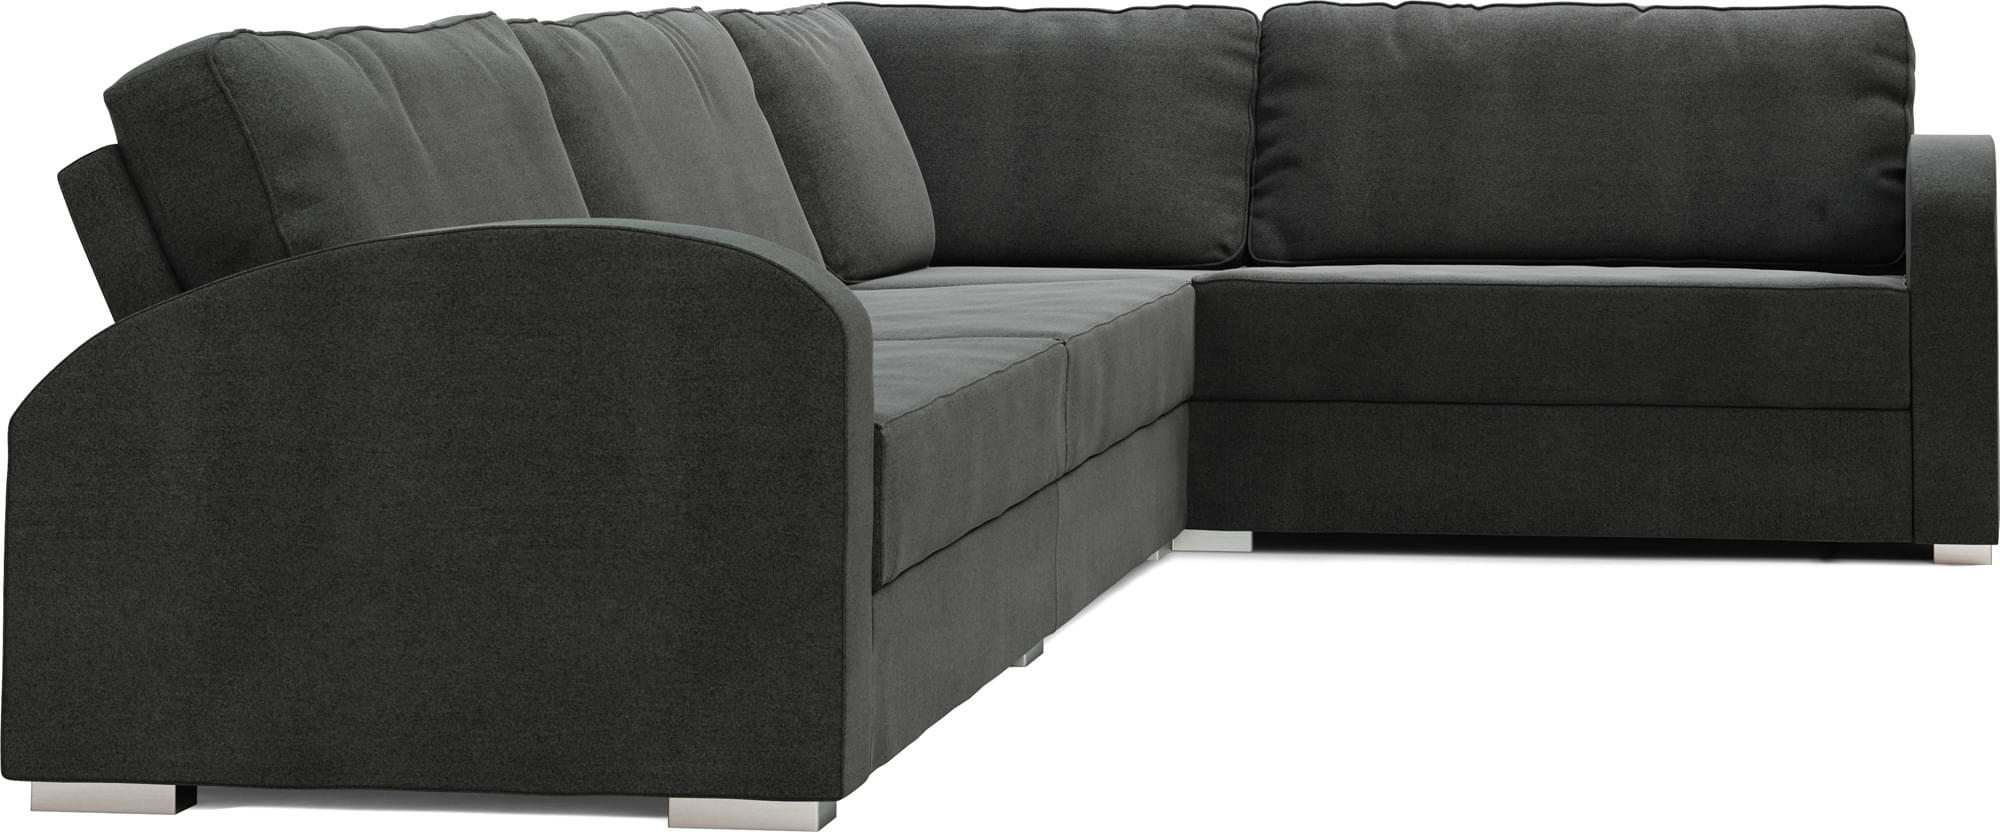 Xuxu 3X2 Corner Single Sofa Bed